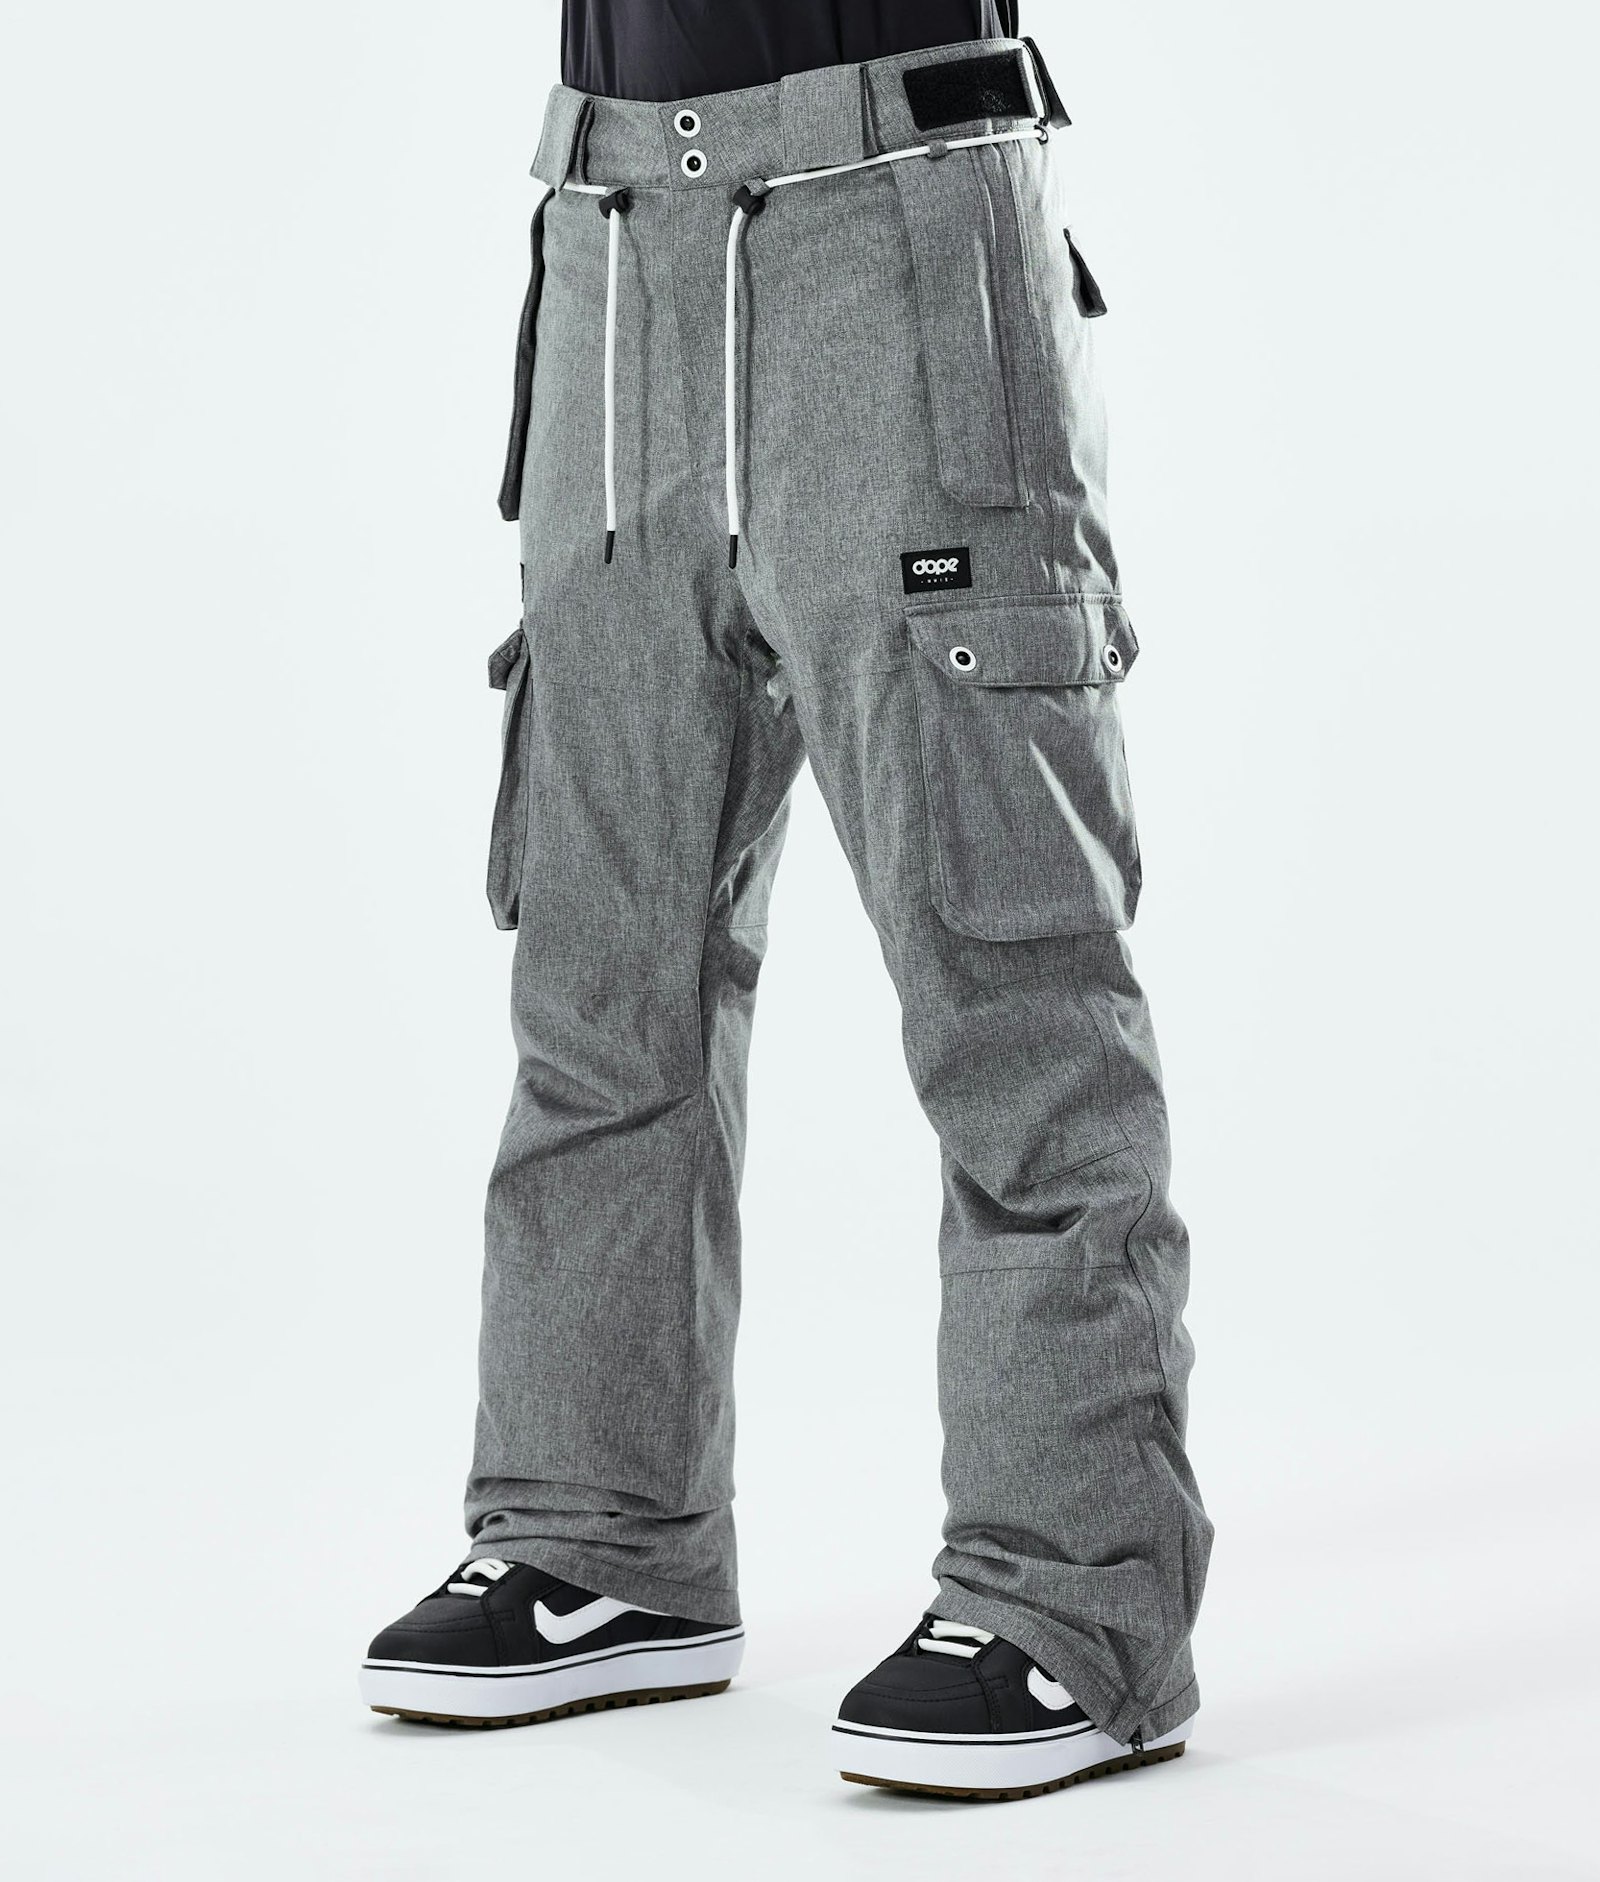 Iconic W 2020 Pantalon de Snowboard Femme Grey Melange